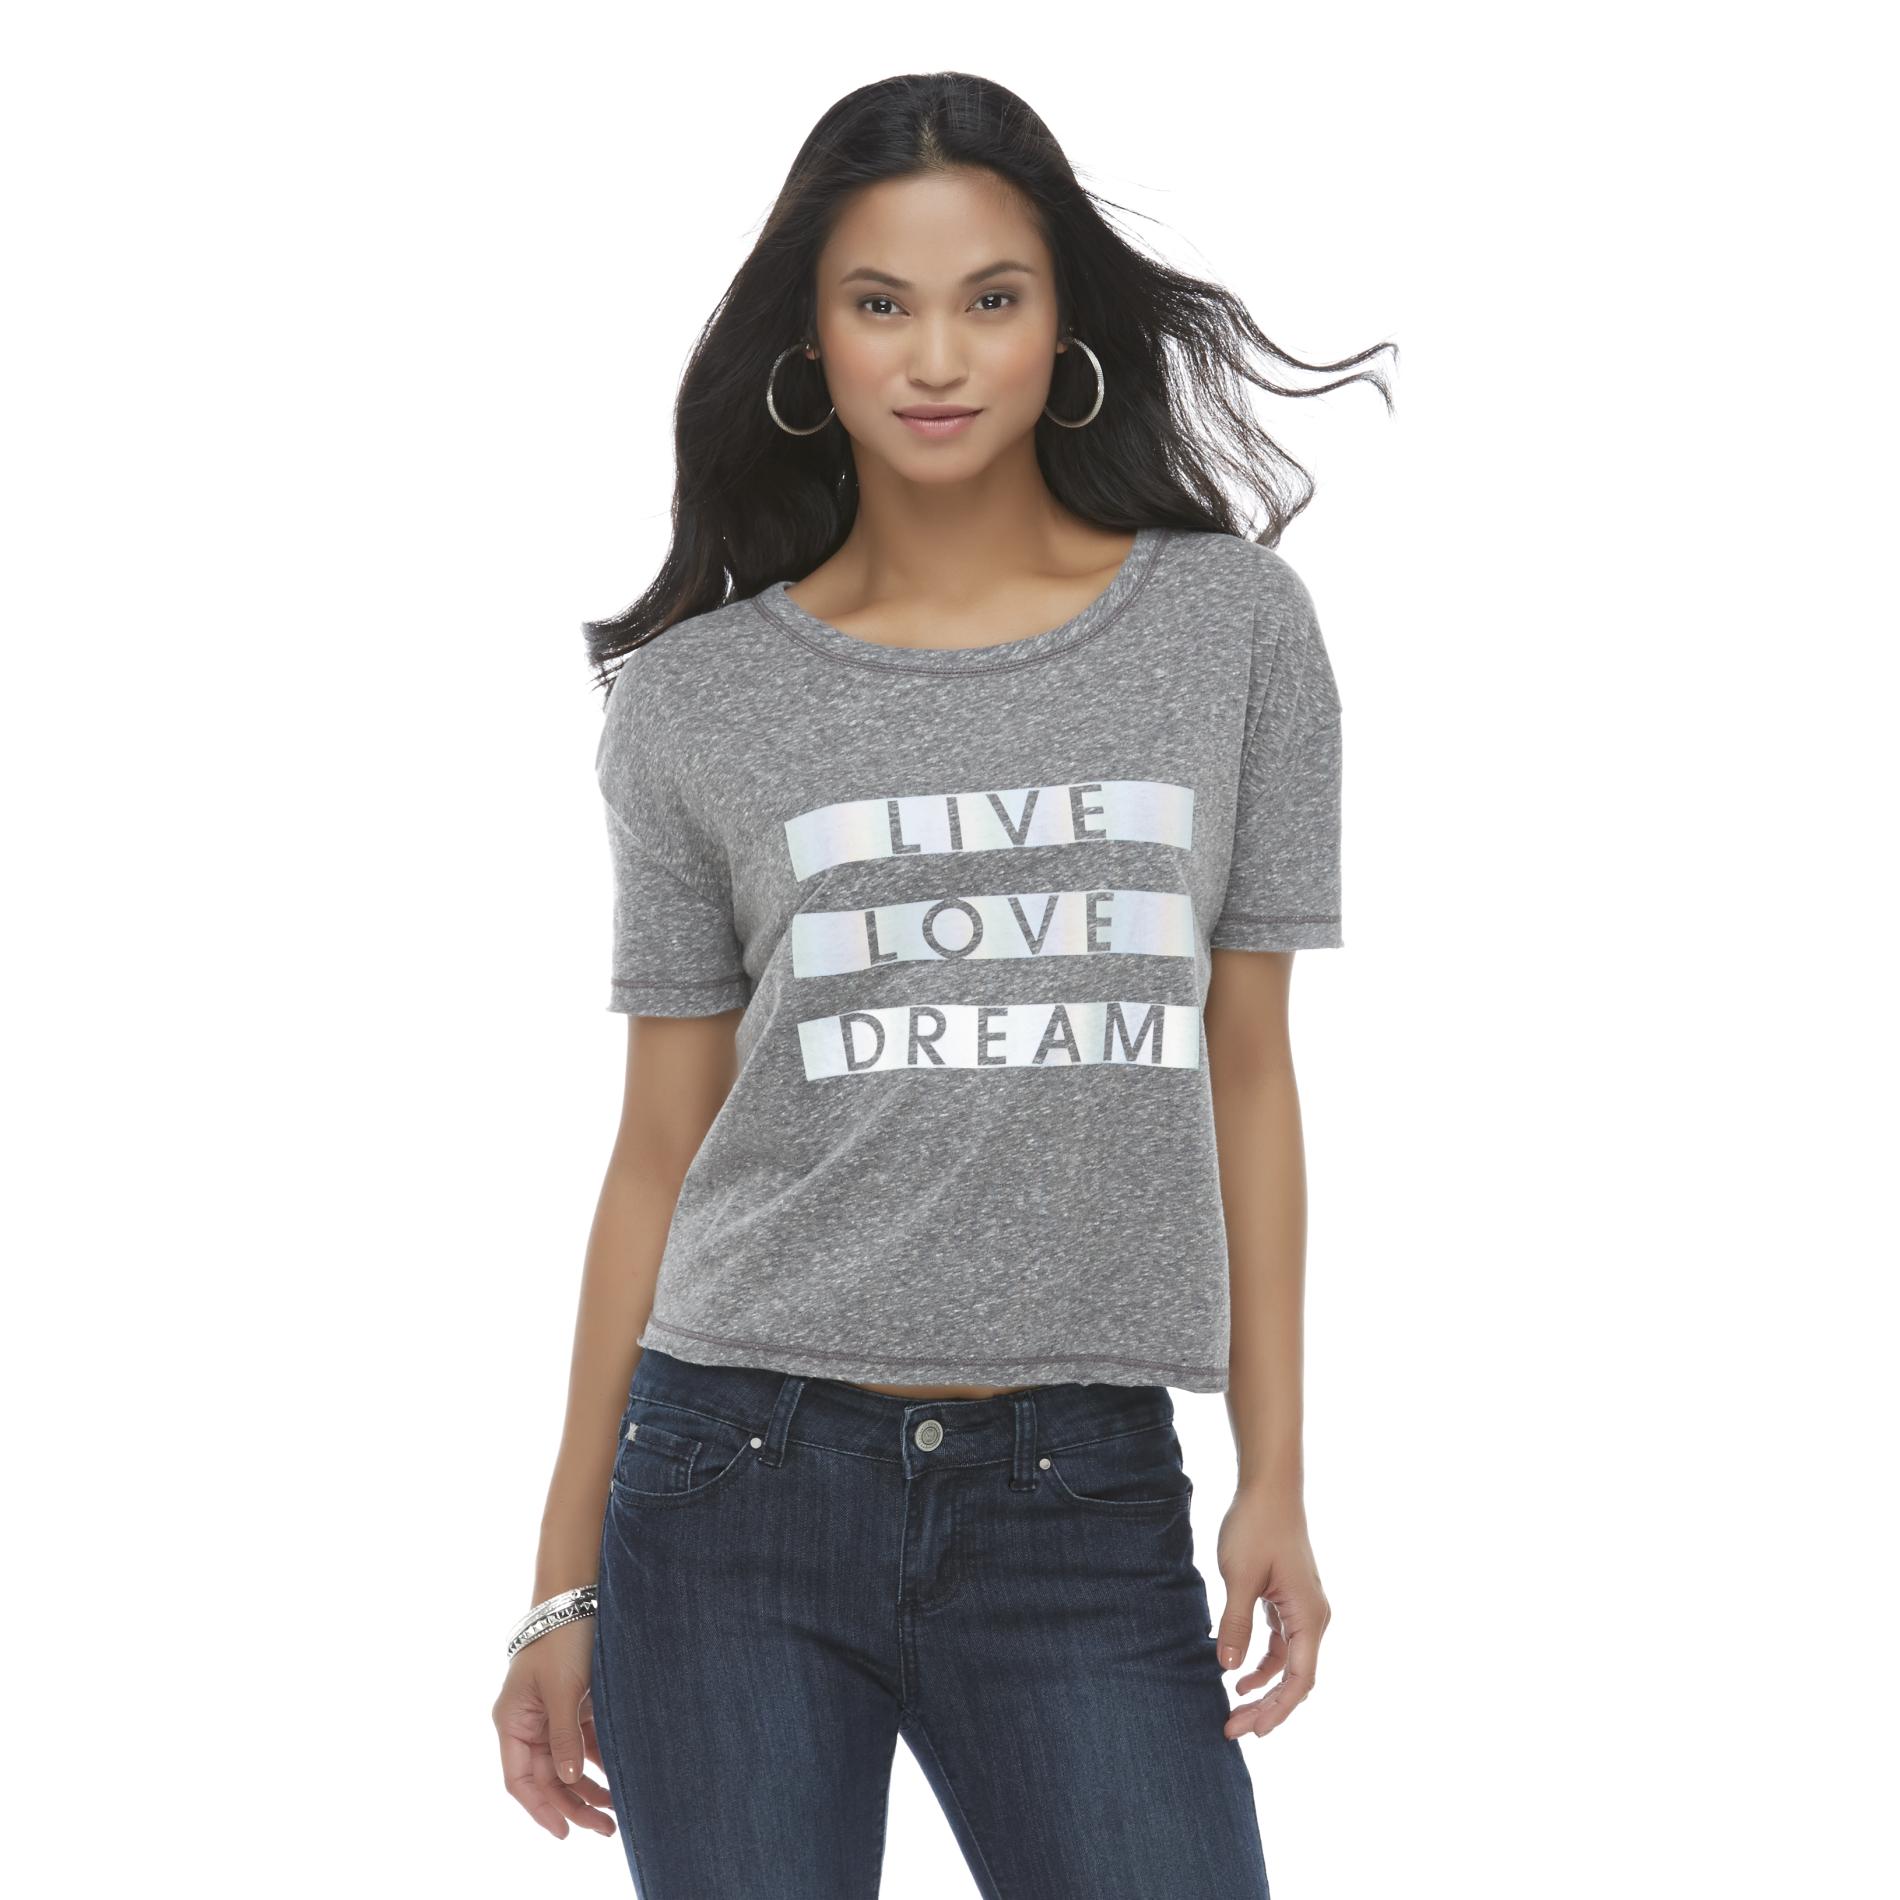 Route 66 Women's Slub Knit Graphic T-Shirt - Live Love Dream